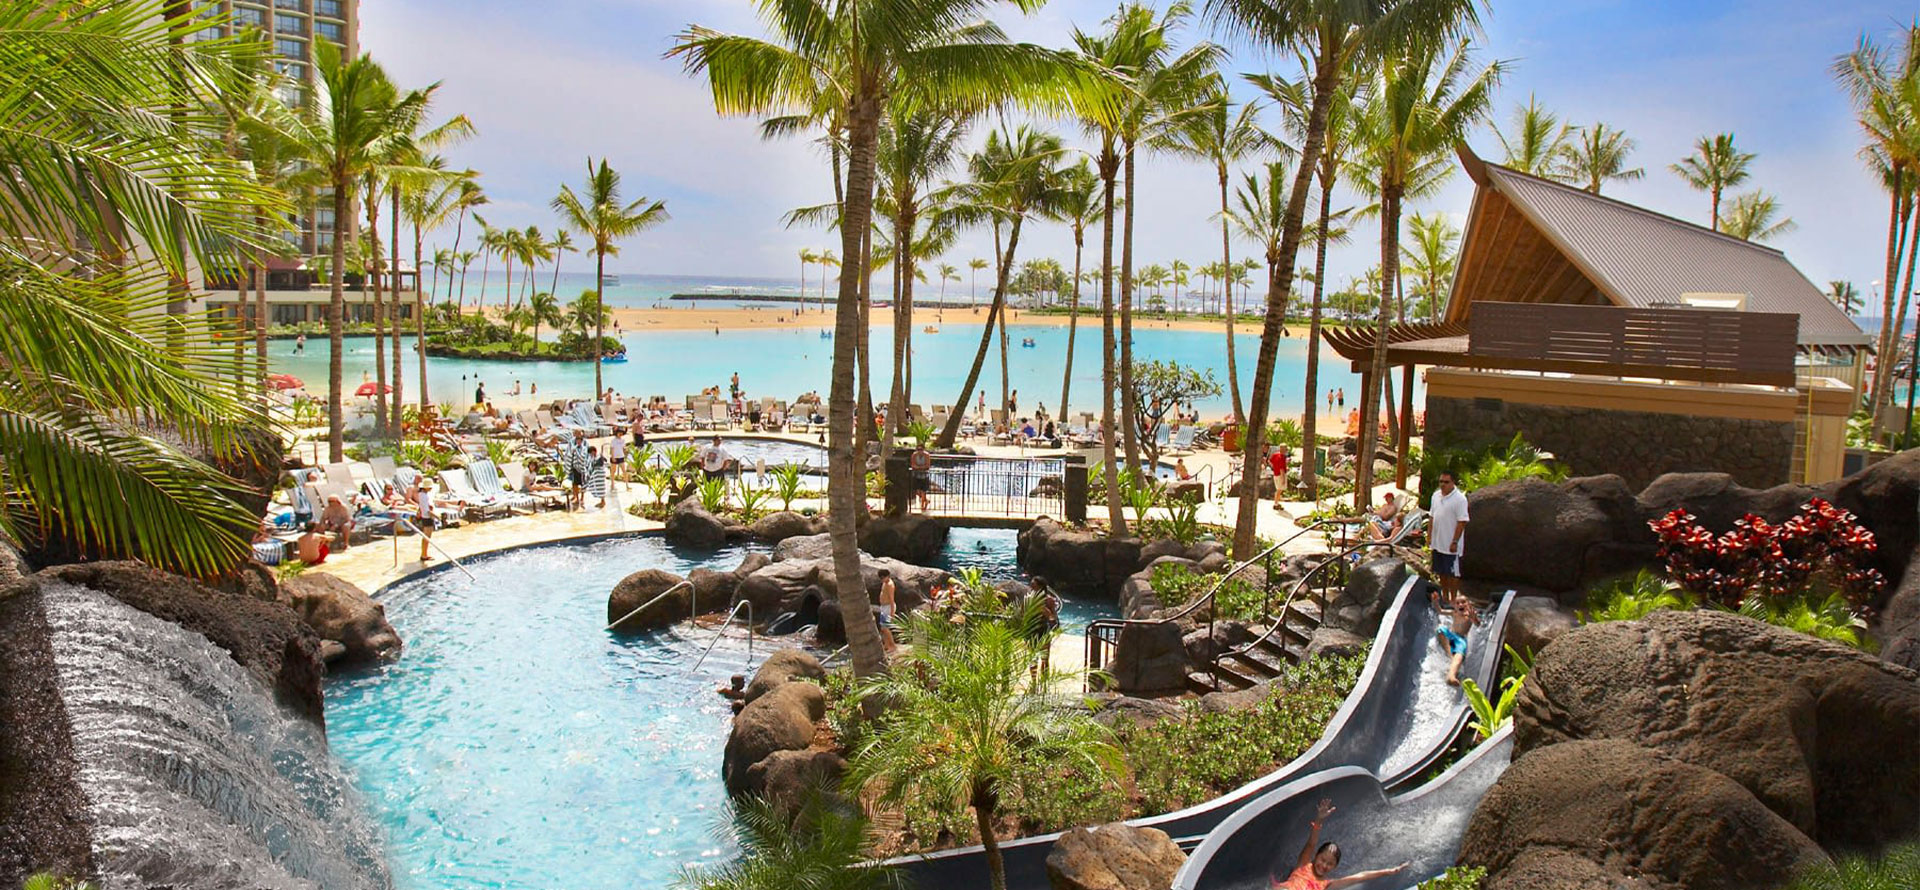 Honolulu all inclusive resorts swimming pool.